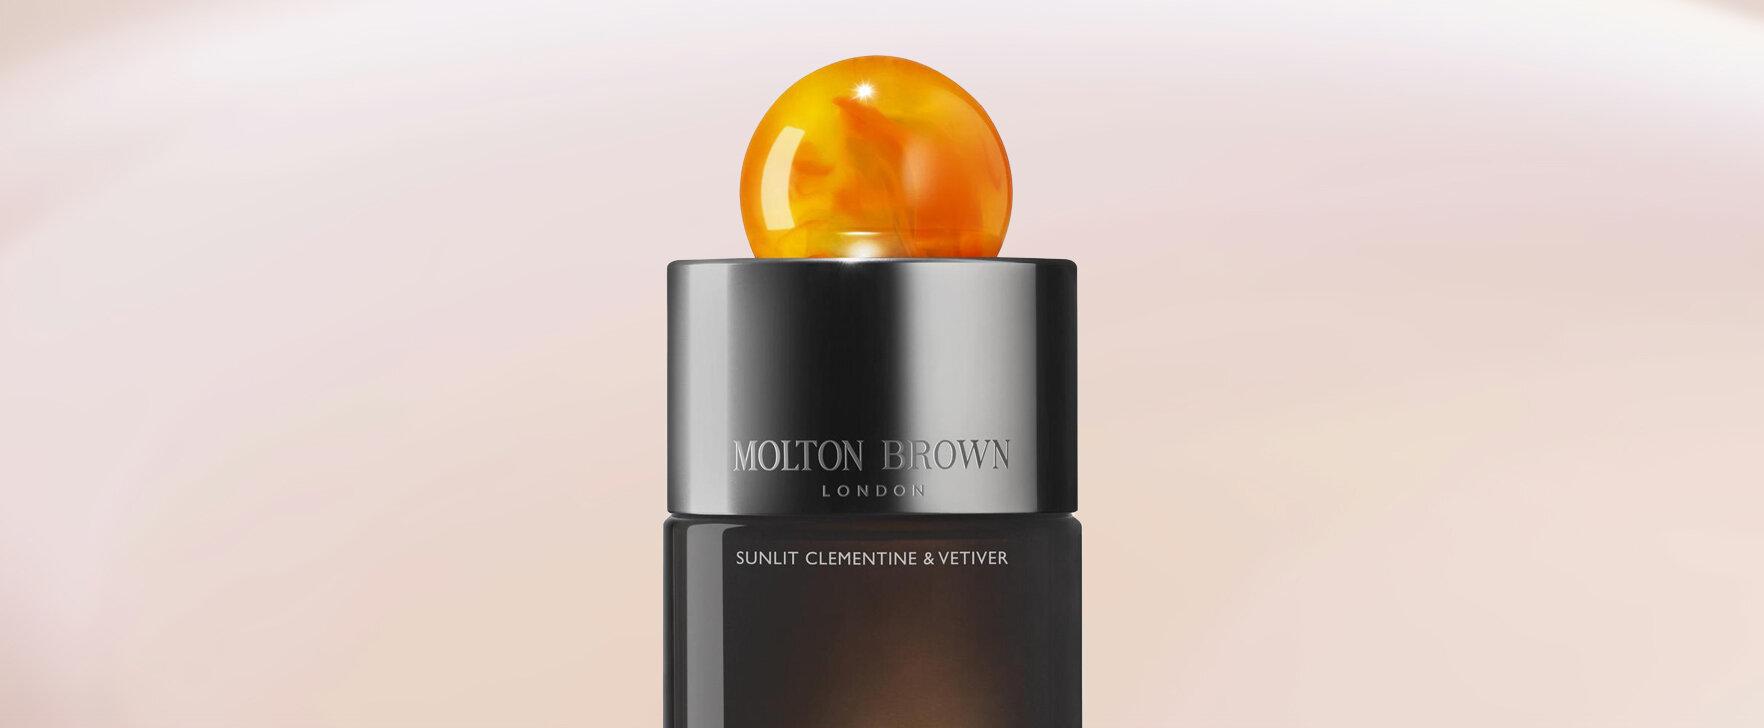 An Eternal Summer: The New Eau de Parfum Sunlit Clementine & Vetiver by Molton Brown